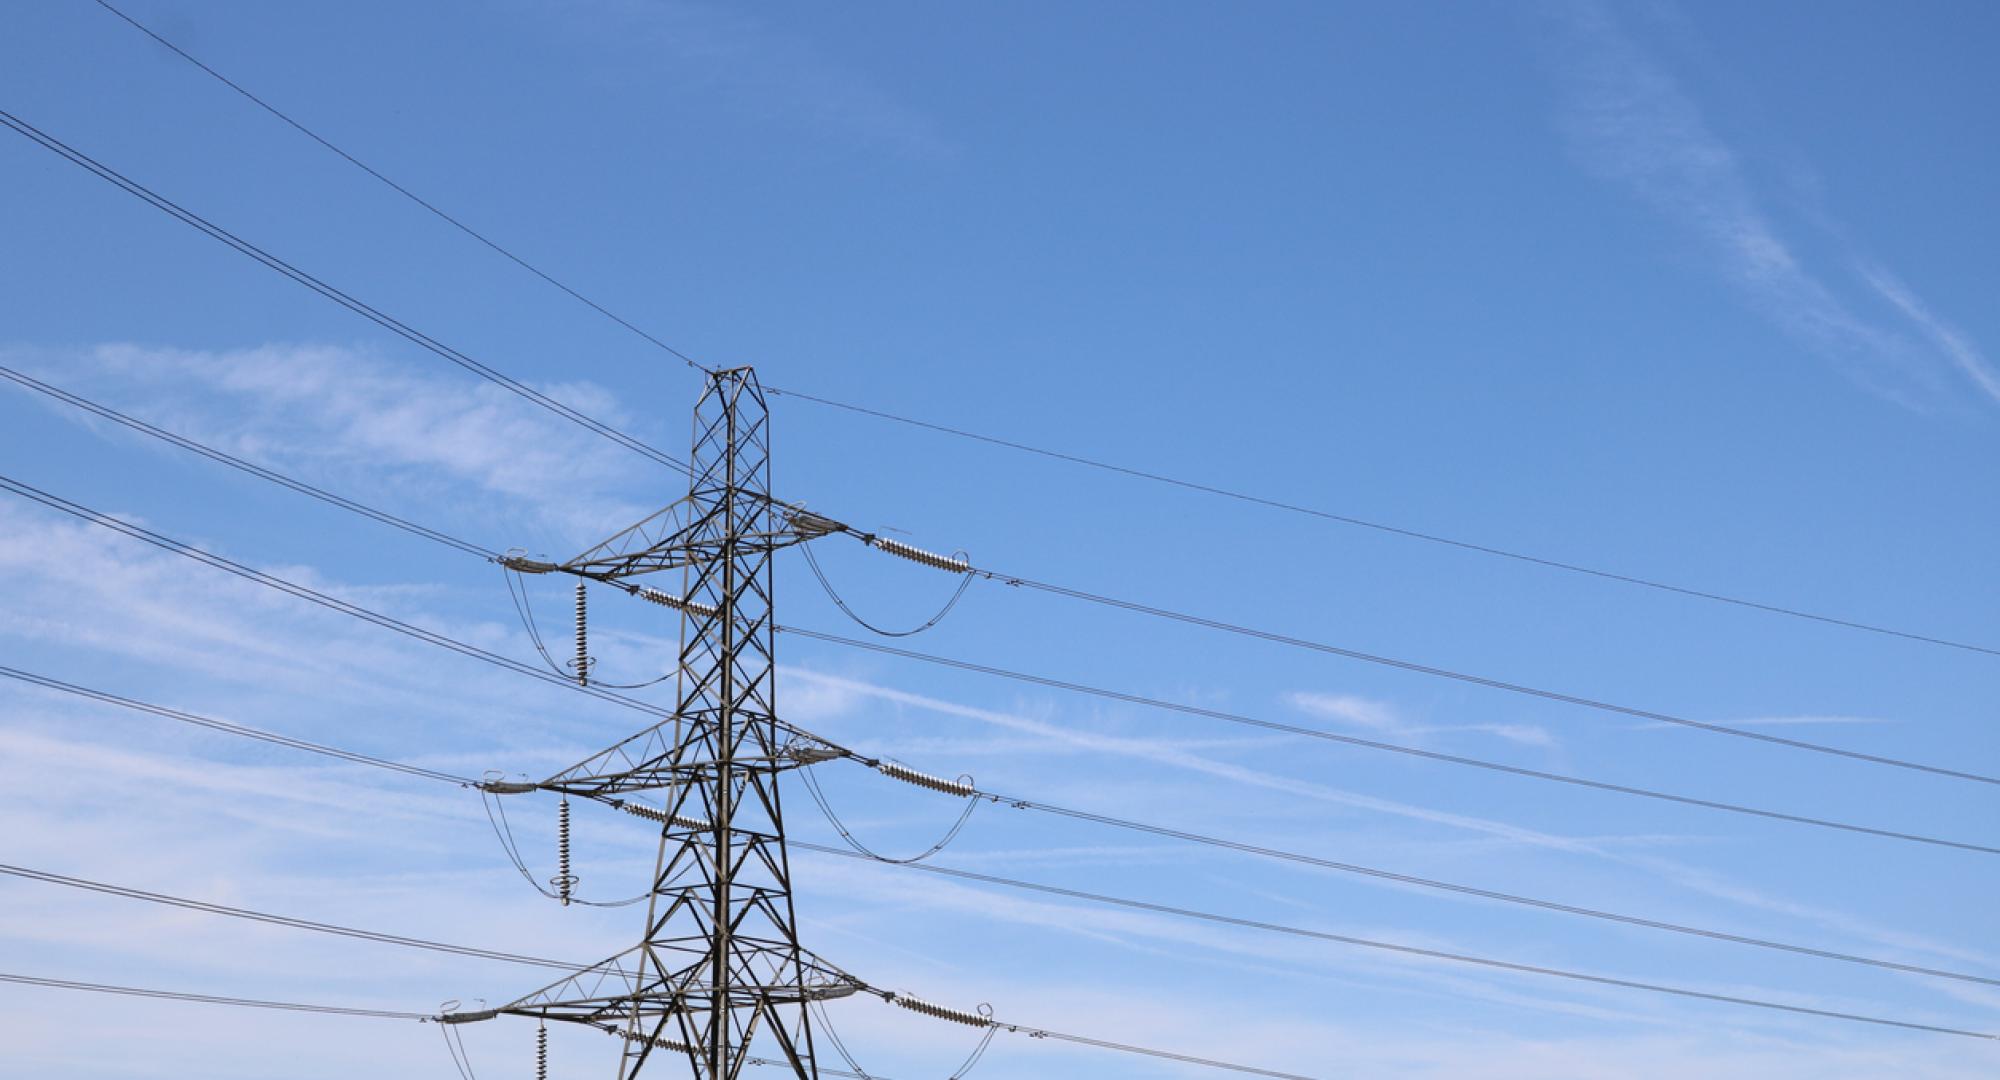 Broadband pylon against soft blue cloudy sky